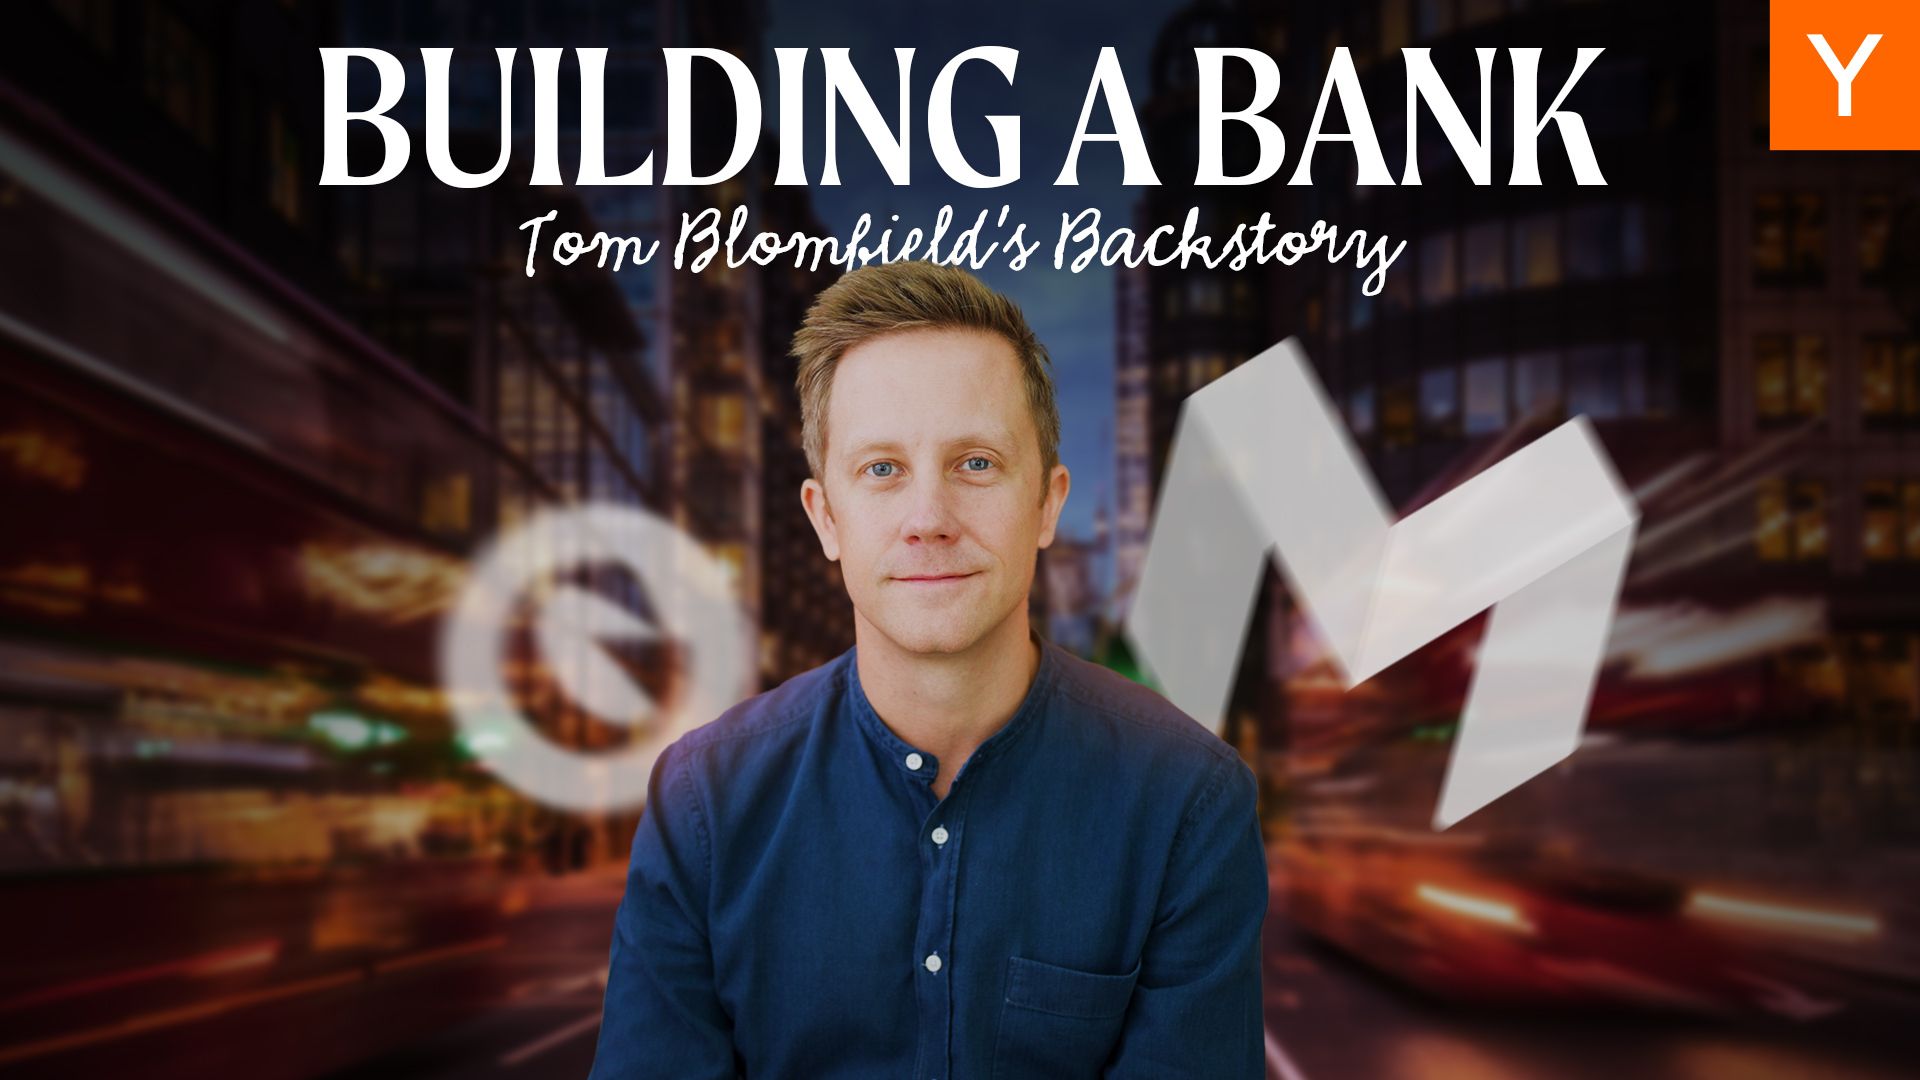 YC Group Partner Tom Blomfield under the text "BUILDING A BANK: Tom Blomfield's Backstory"